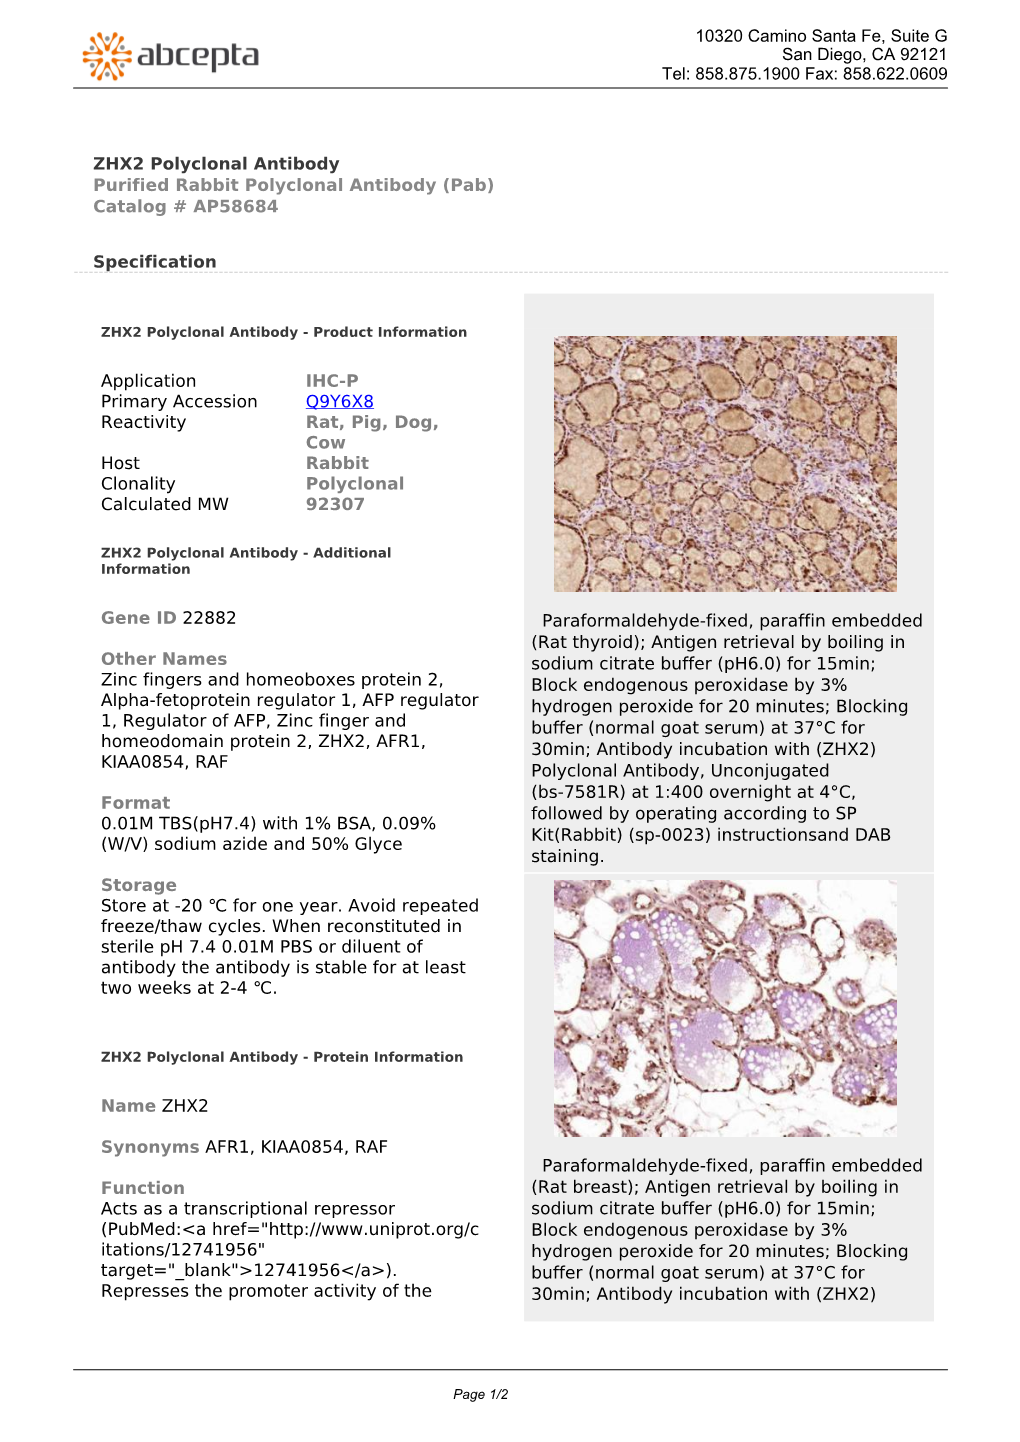 ZHX2 Polyclonal Antibody Purified Rabbit Polyclonal Antibody (Pab) Catalog # AP58684